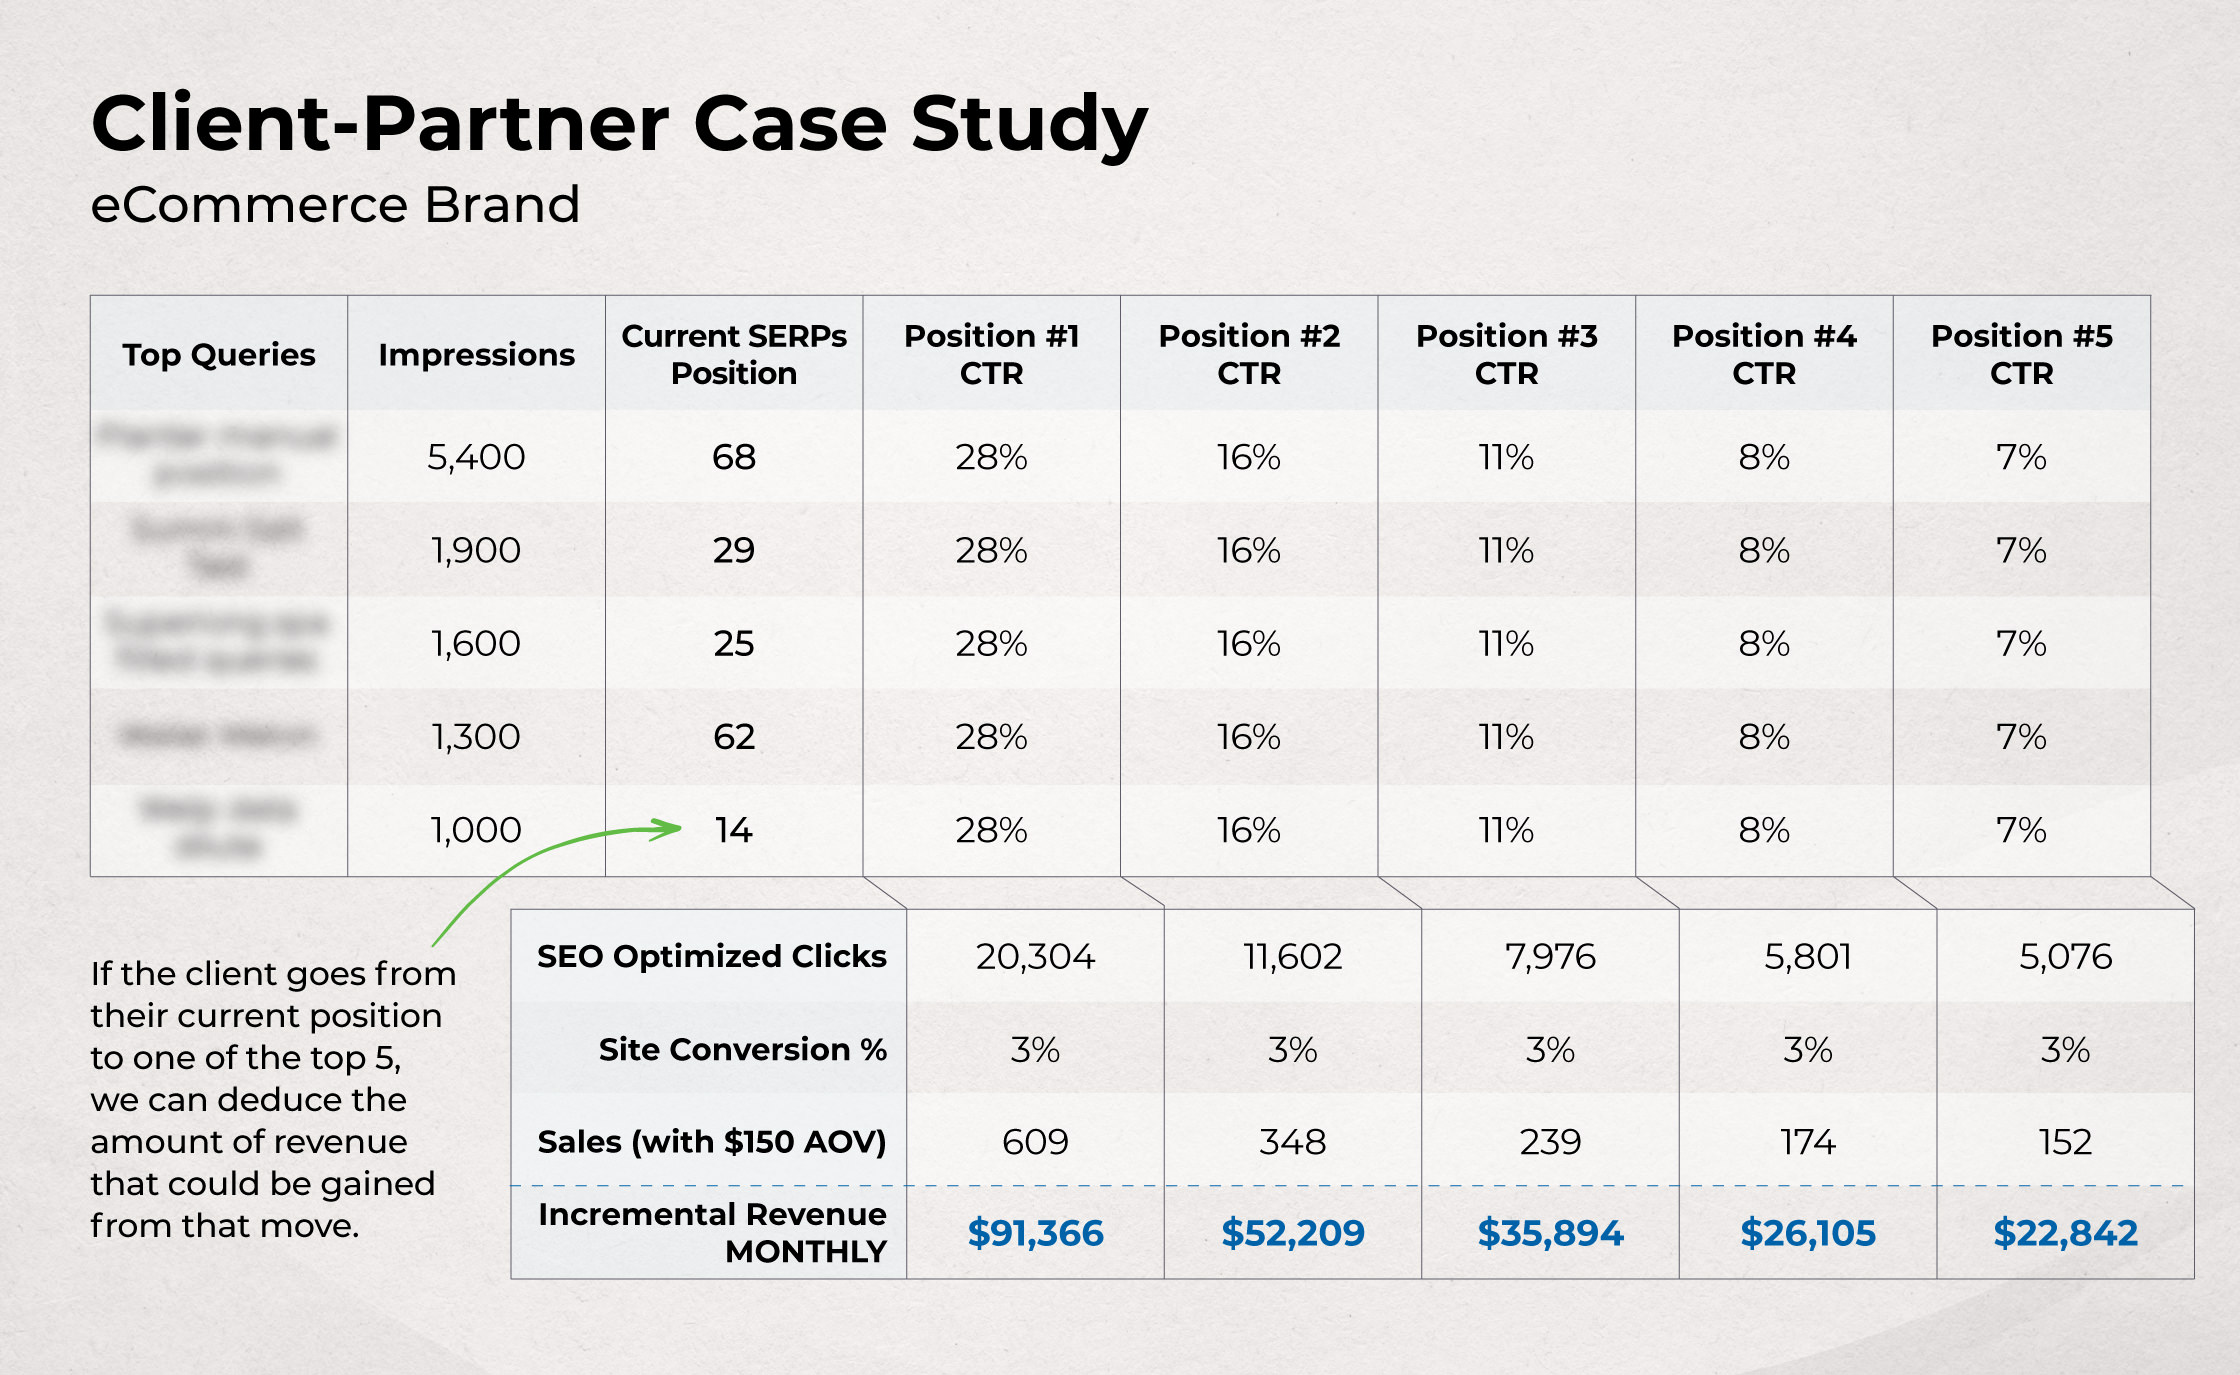 Client-partner case study: eCommerce Brand